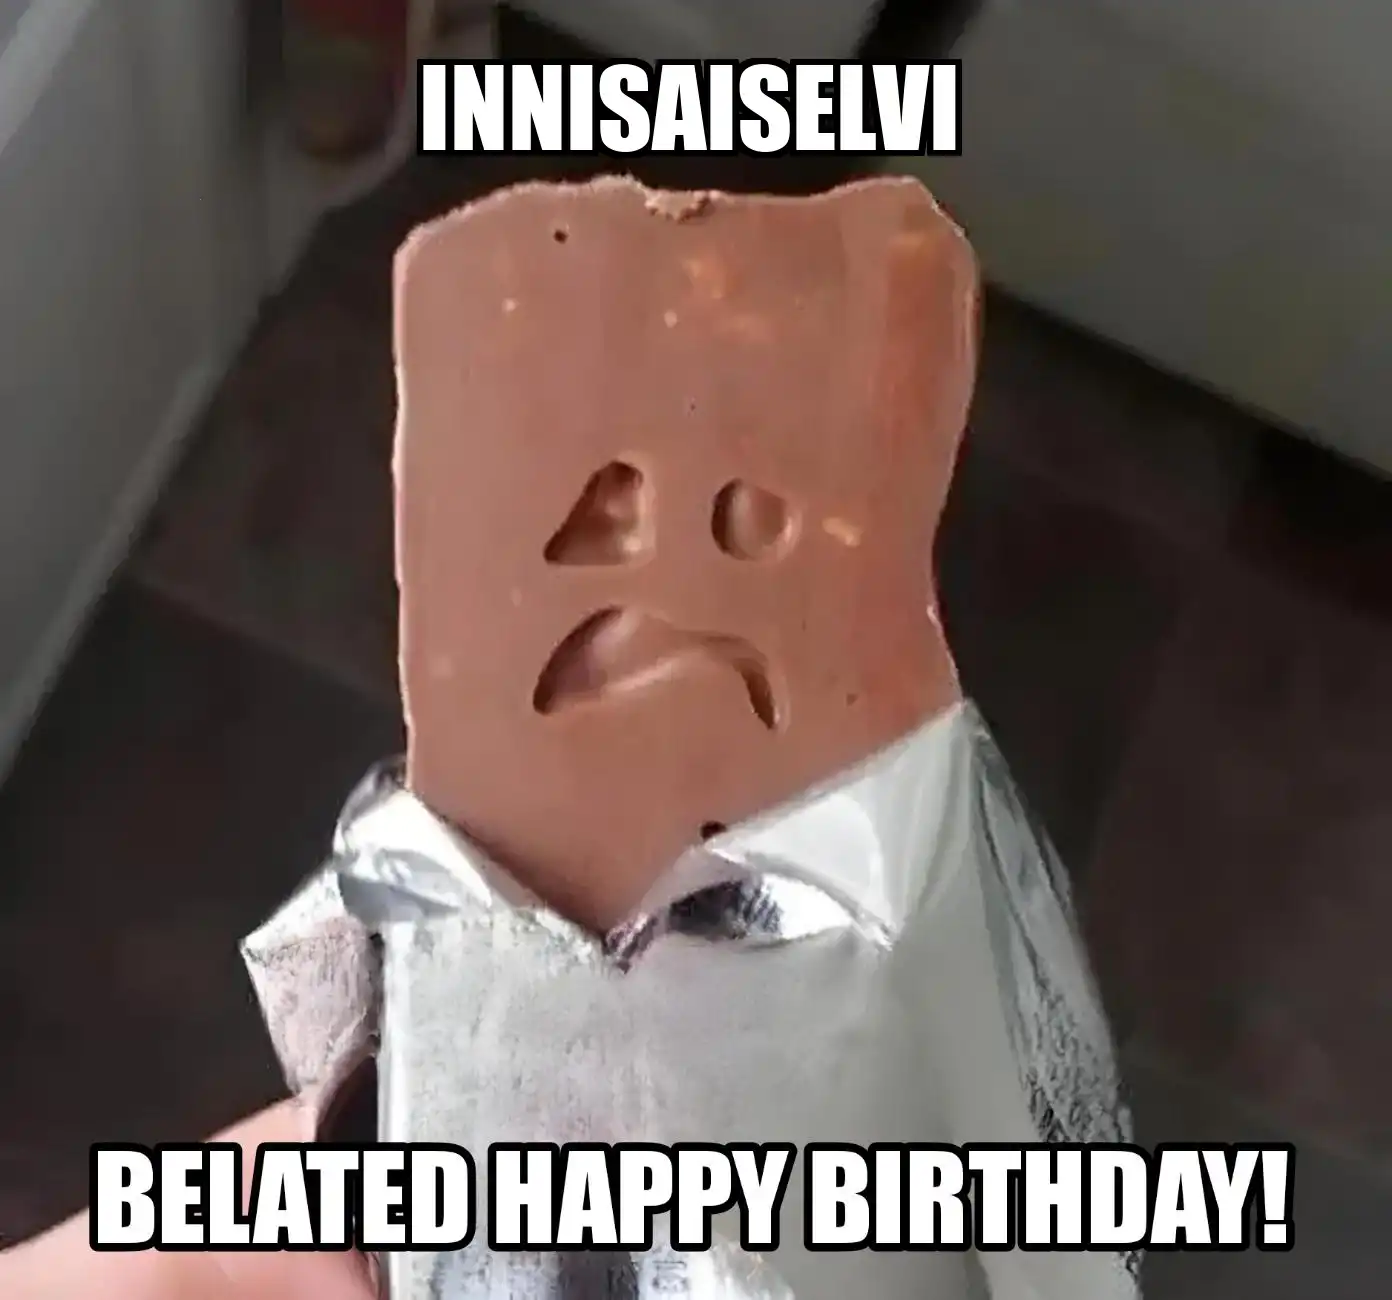 Happy Birthday Innisaiselvi Belated Happy Birthday Meme